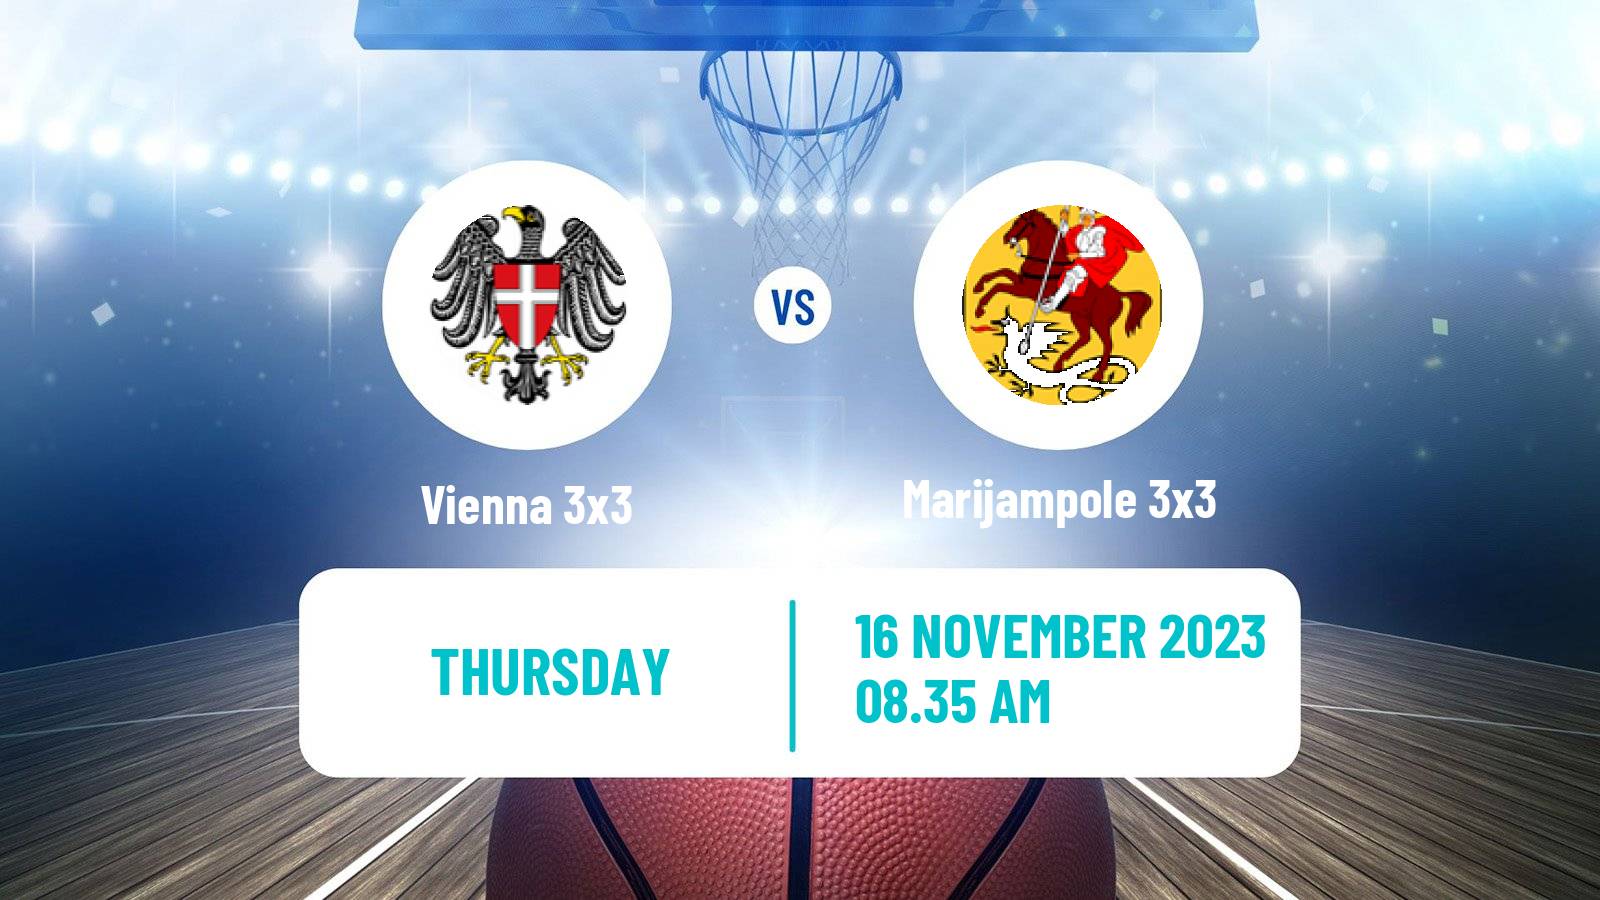 Basketball World Tour Manama 3x3 Vienna 3x3 - Marijampole 3x3